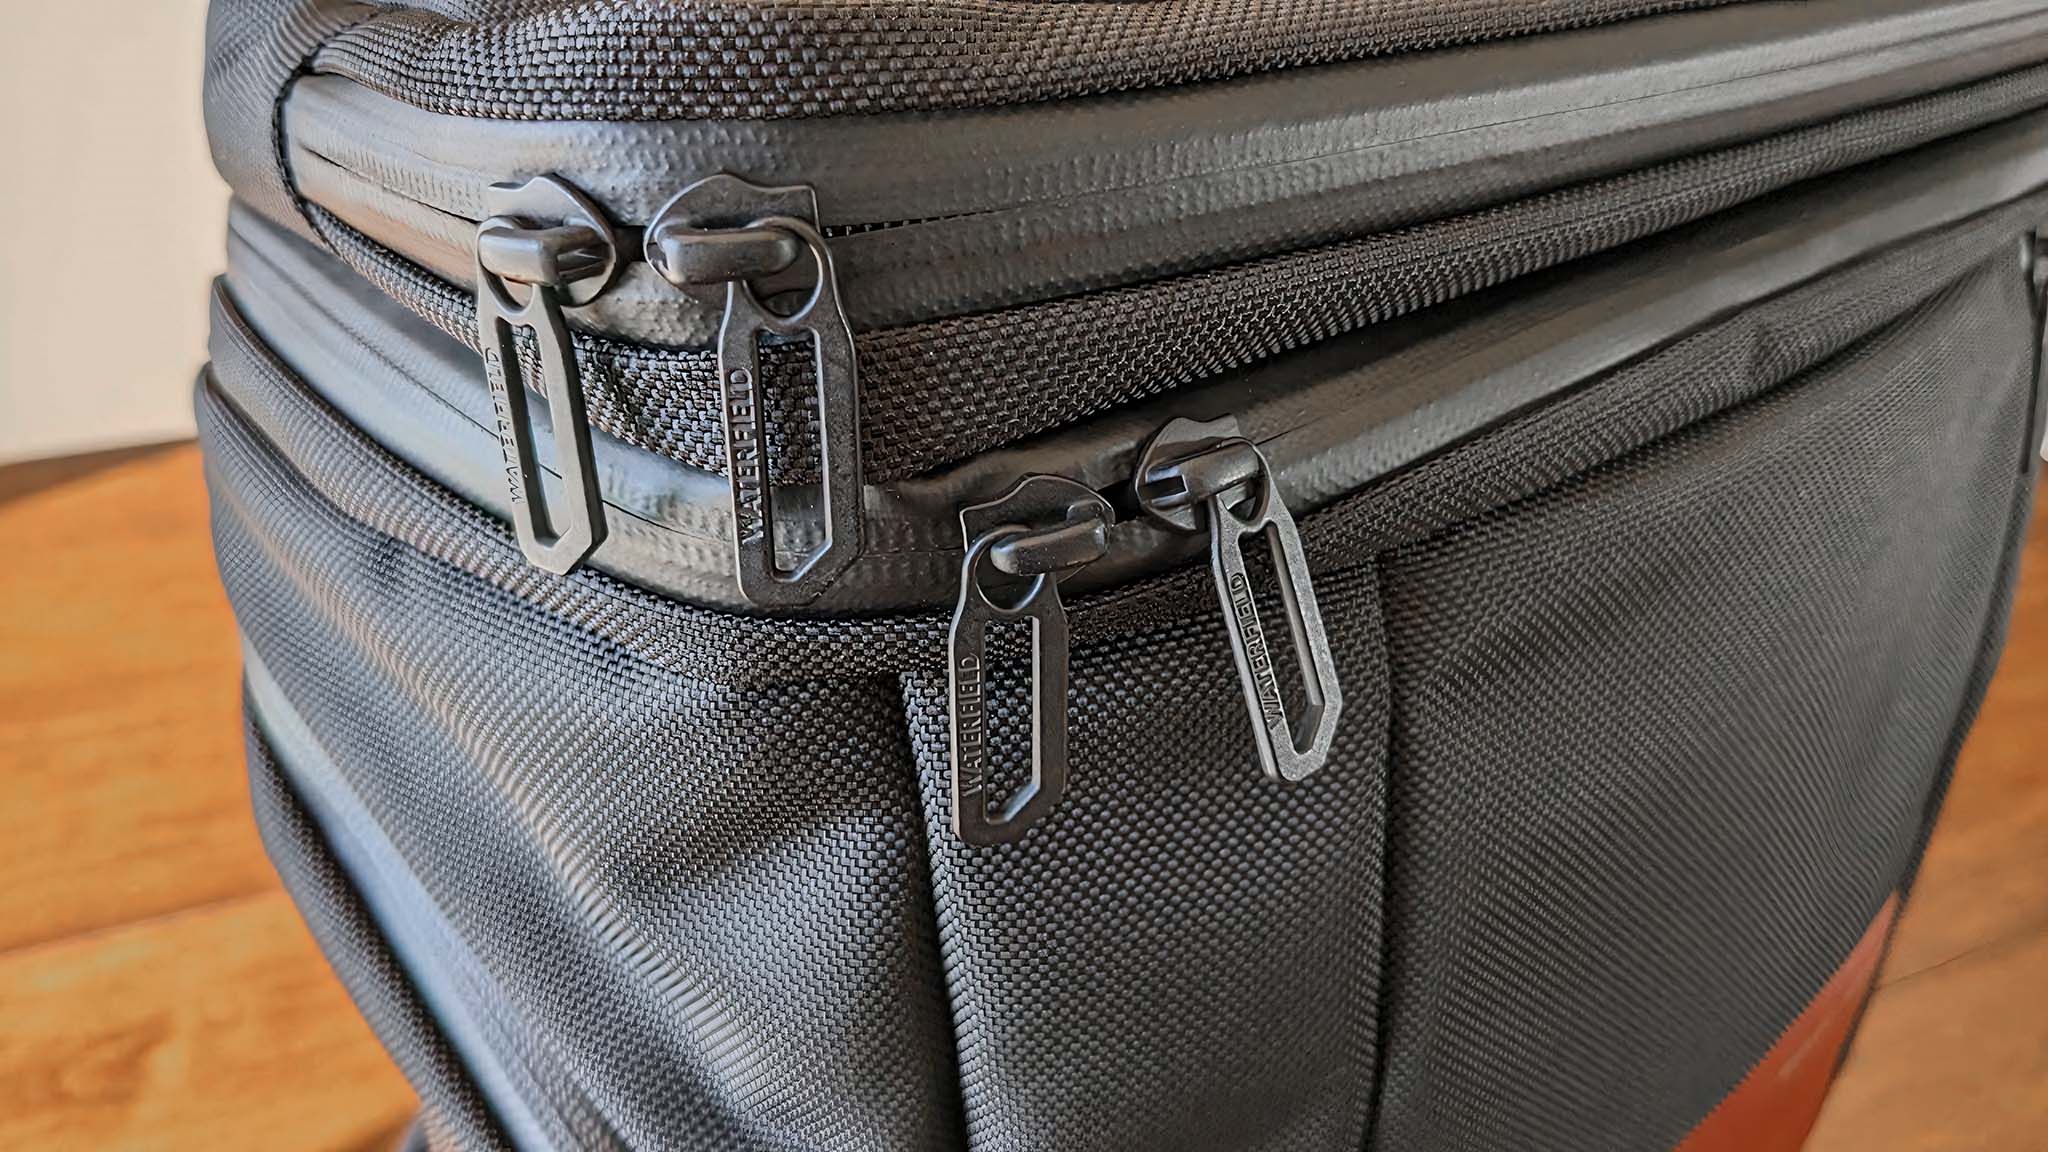 Waterfield Air Porter Travel Backpack zippers.